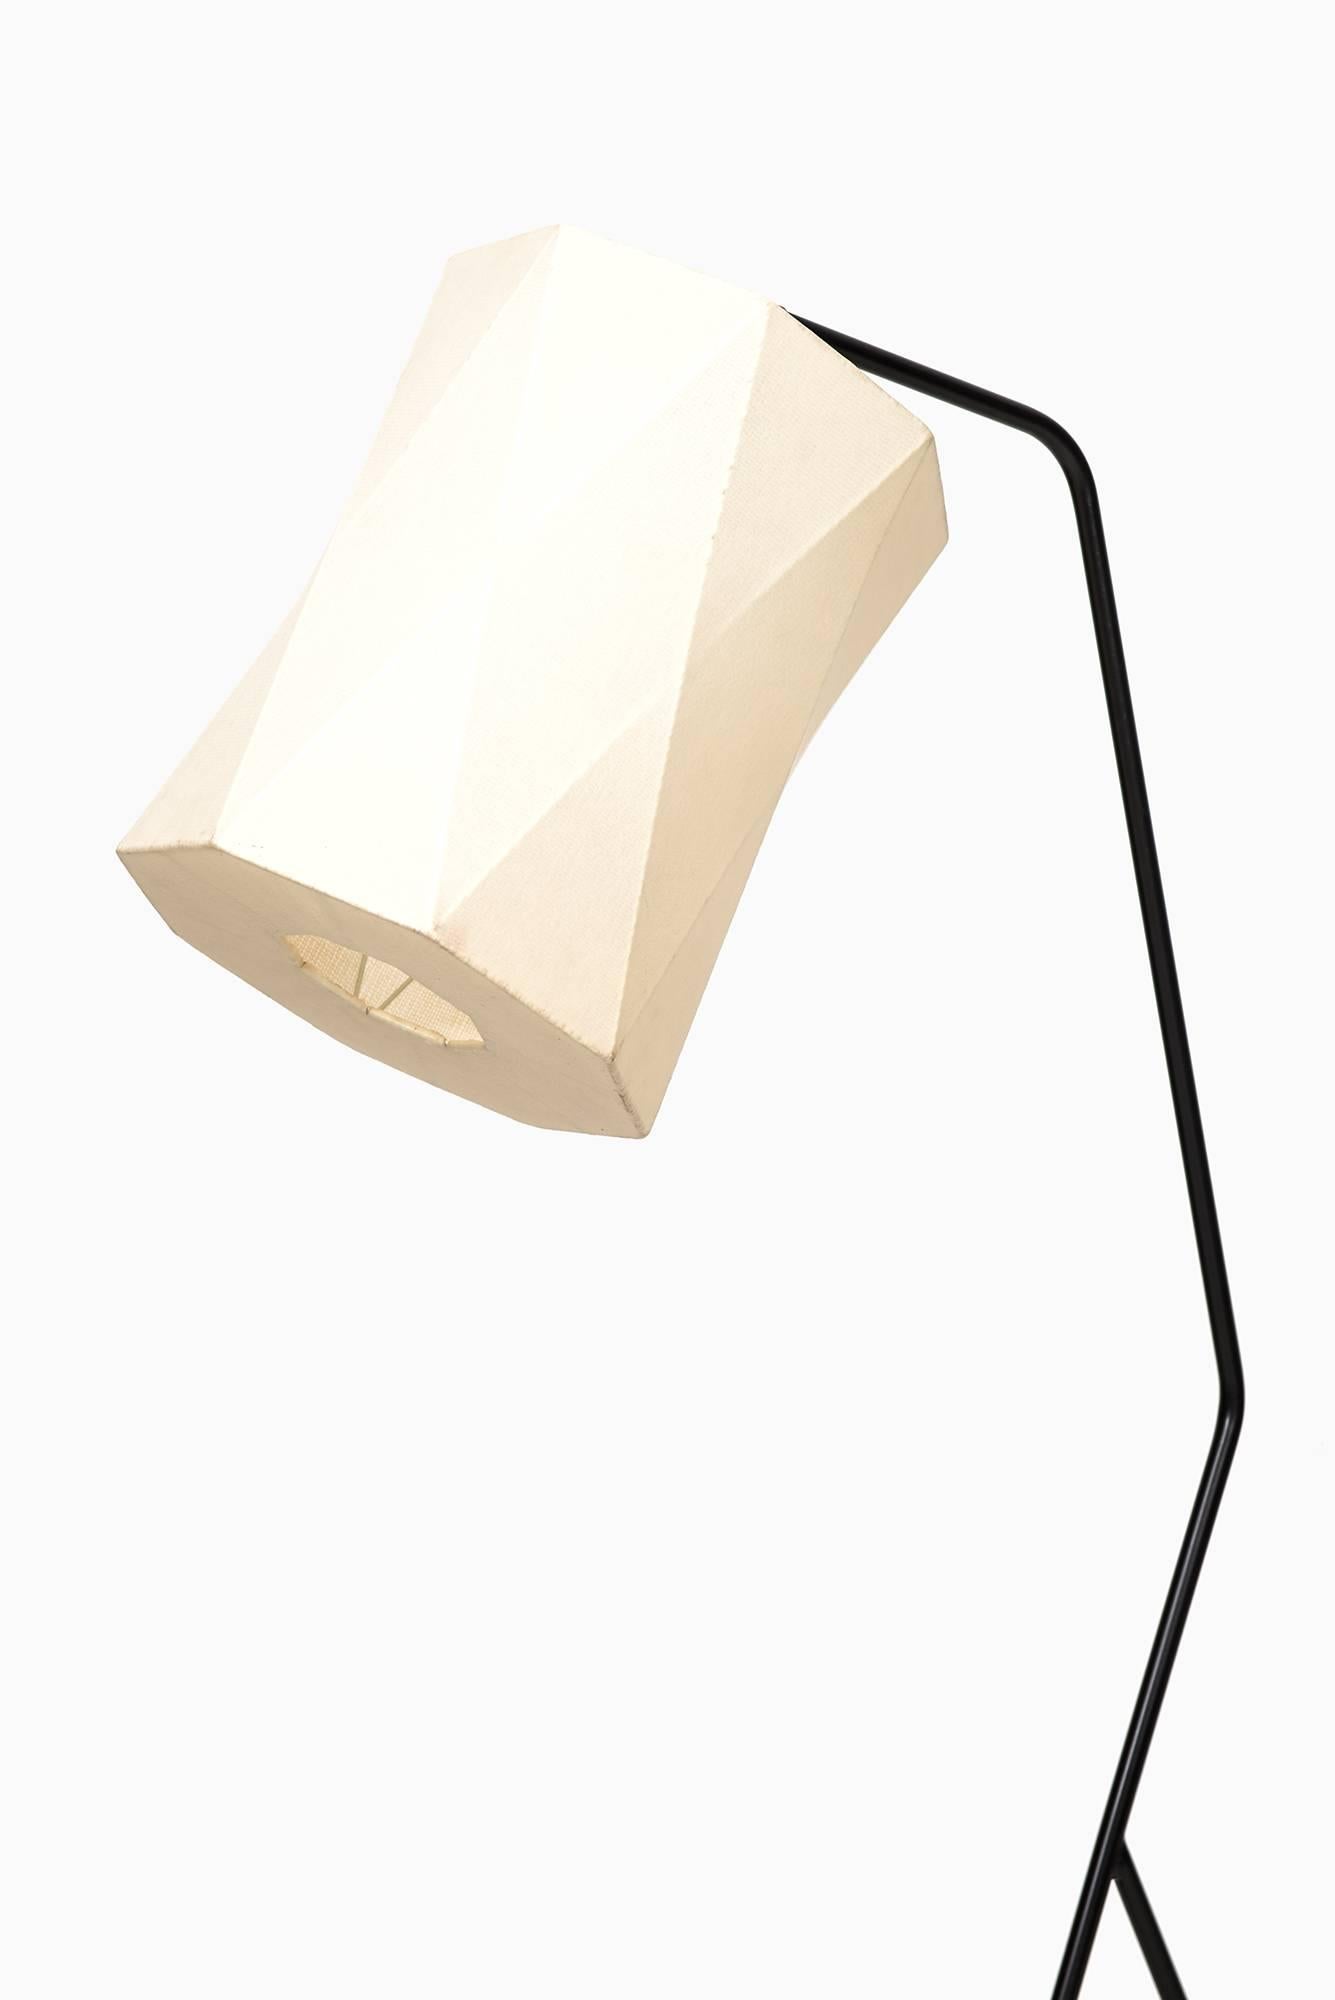 Swedish Midcentury Floor Lamp with Harlequin Shade by Hans Bergström